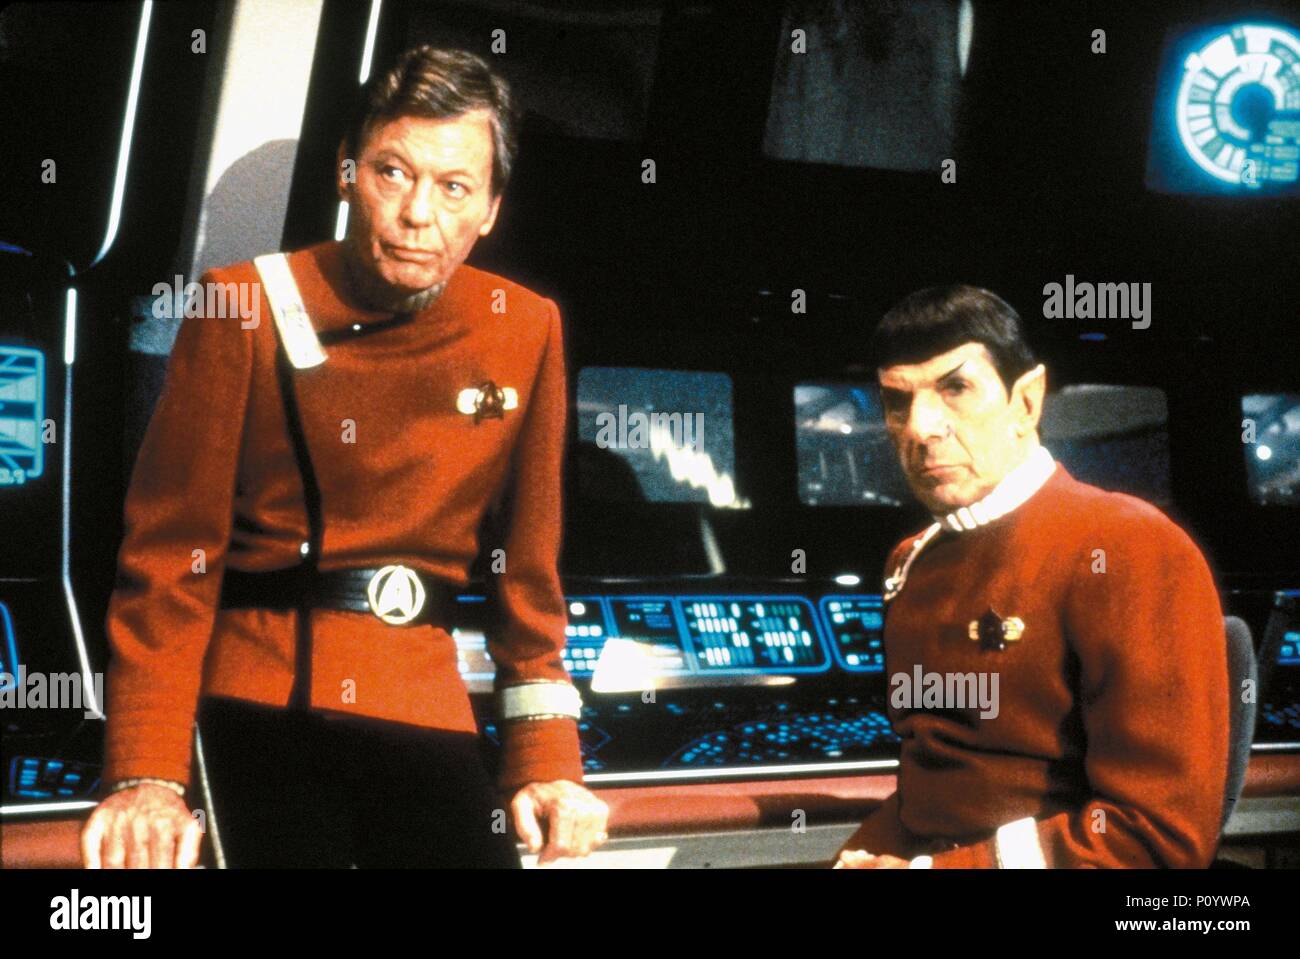 Original Film Titel: Star Trek V: The Final Frontier. Englischer Titel: Star Trek V: The Final Frontier. Regisseur: William Shatner. Jahr: 1989. Stars: Leonard Nimoy, DEFOREST KELLEY. Quelle: Paramount Pictures/Album Stockfoto